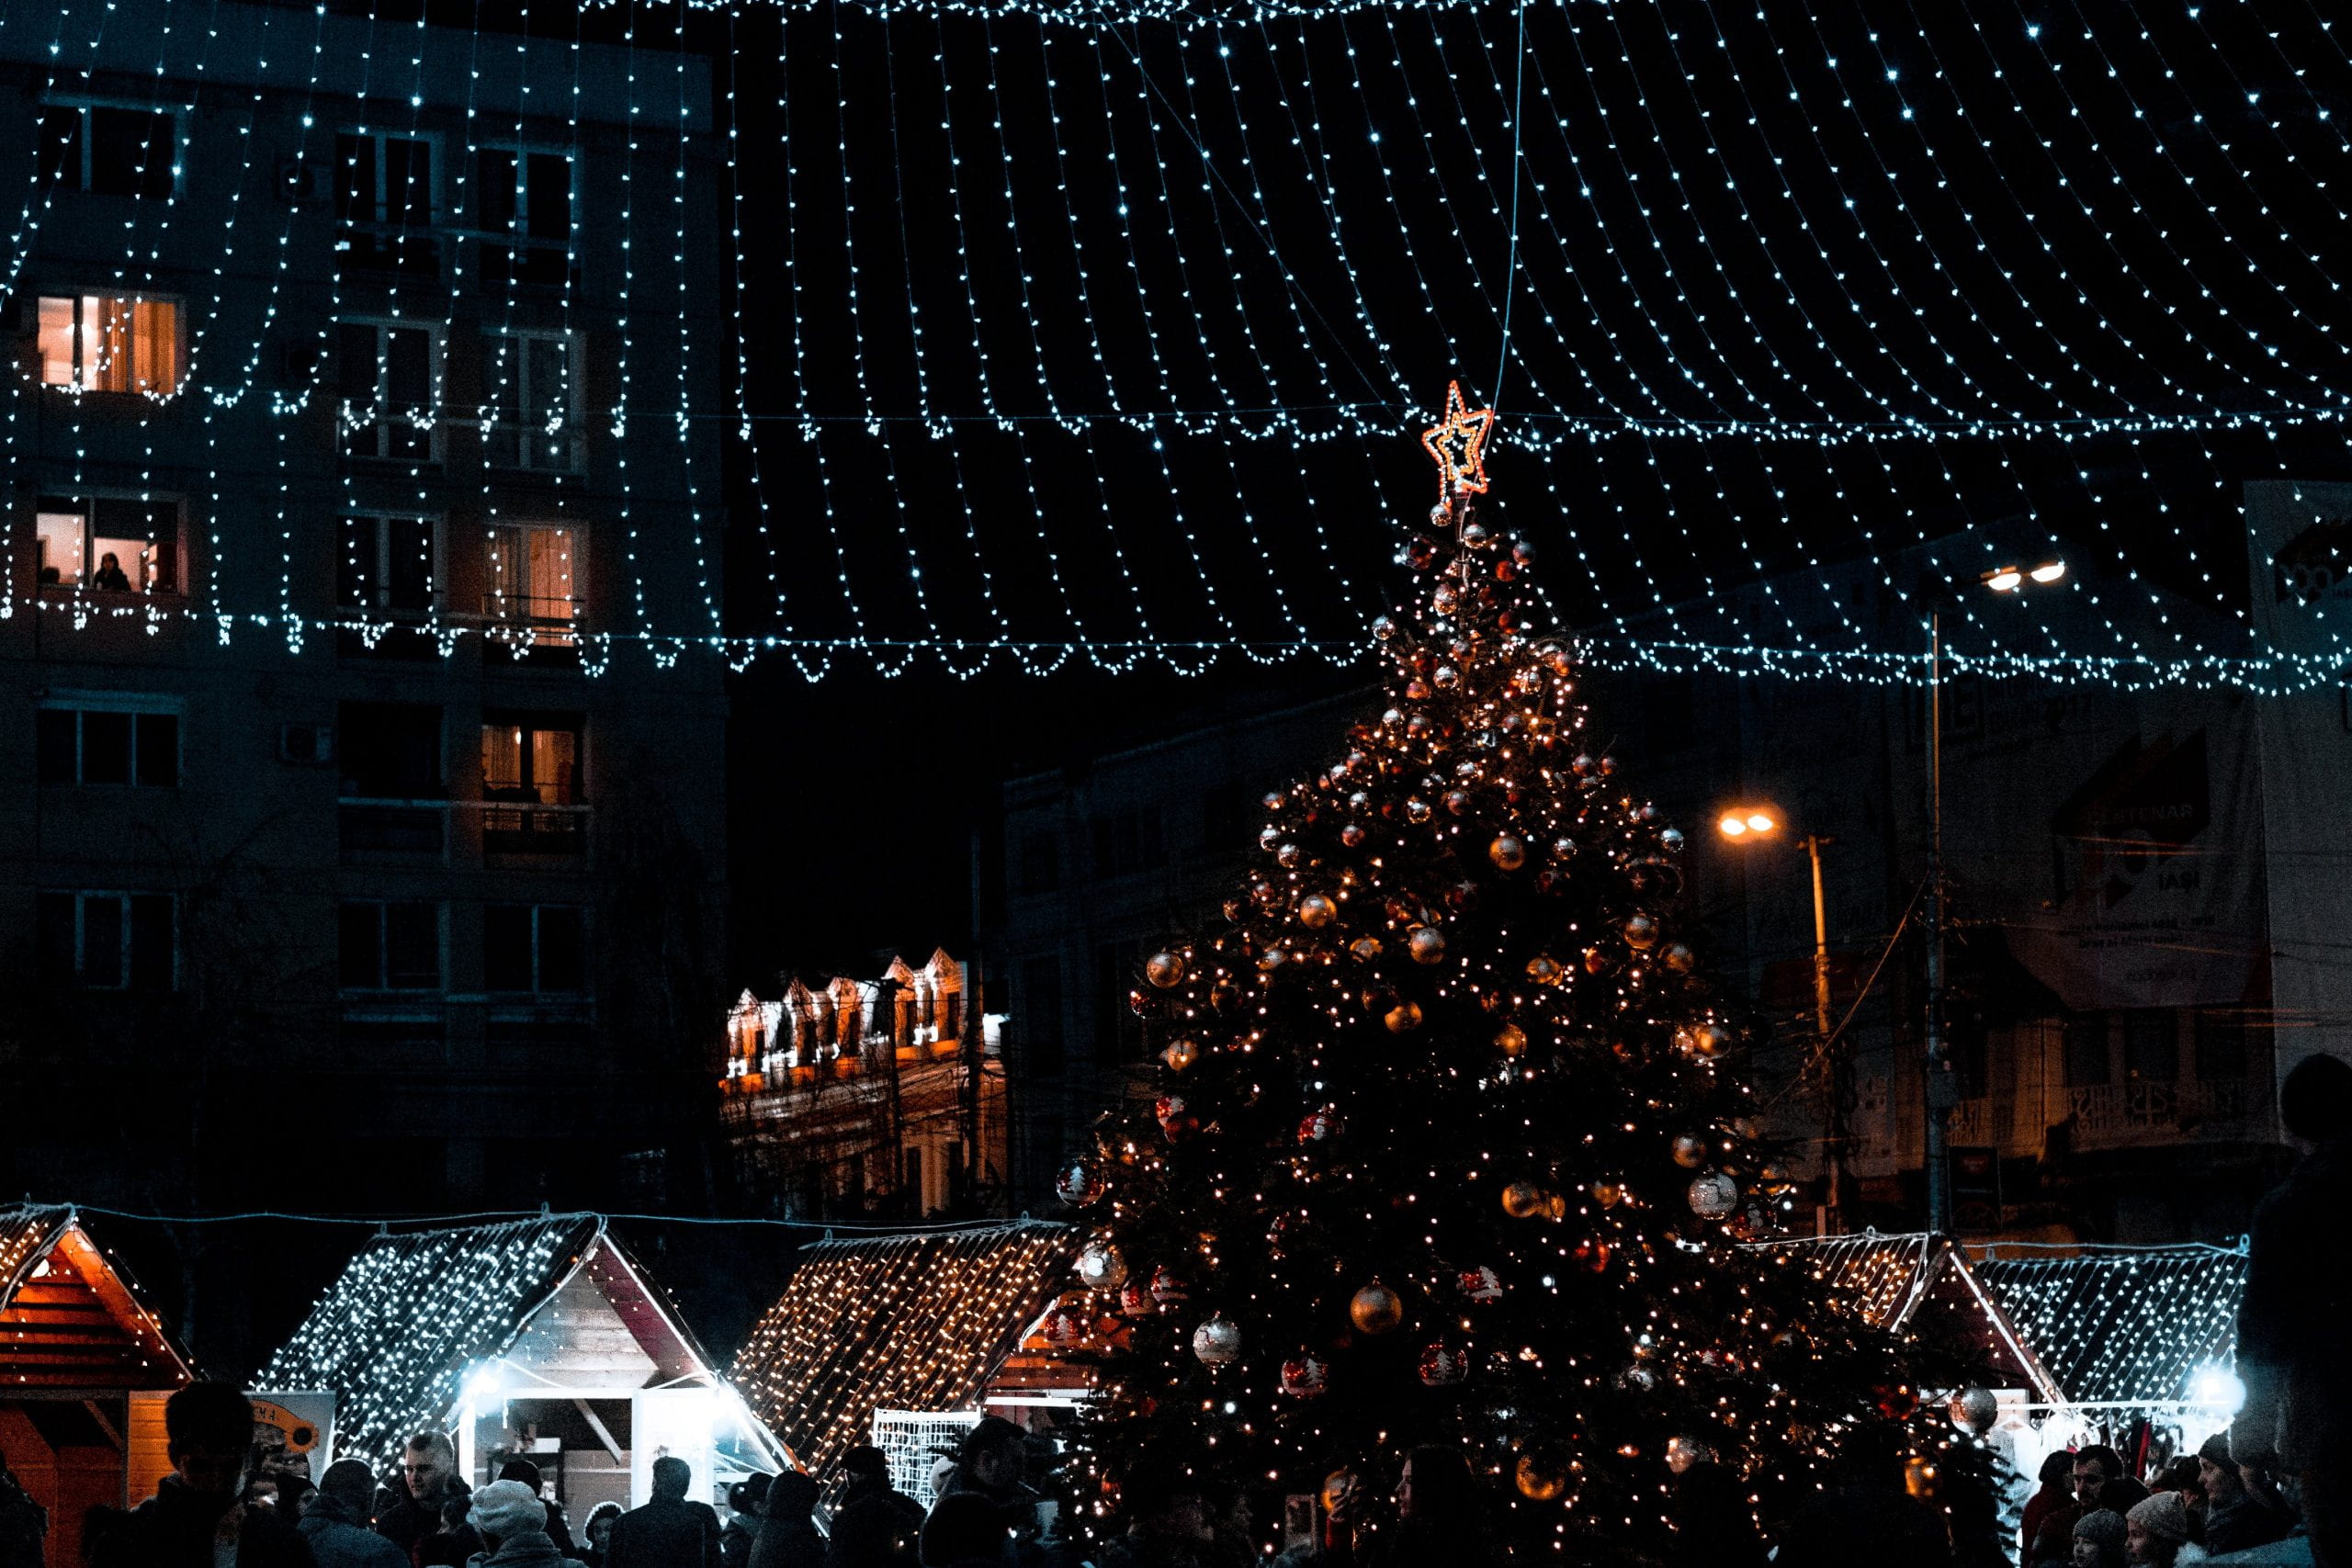 Christmas Tree, lights and market stalls.